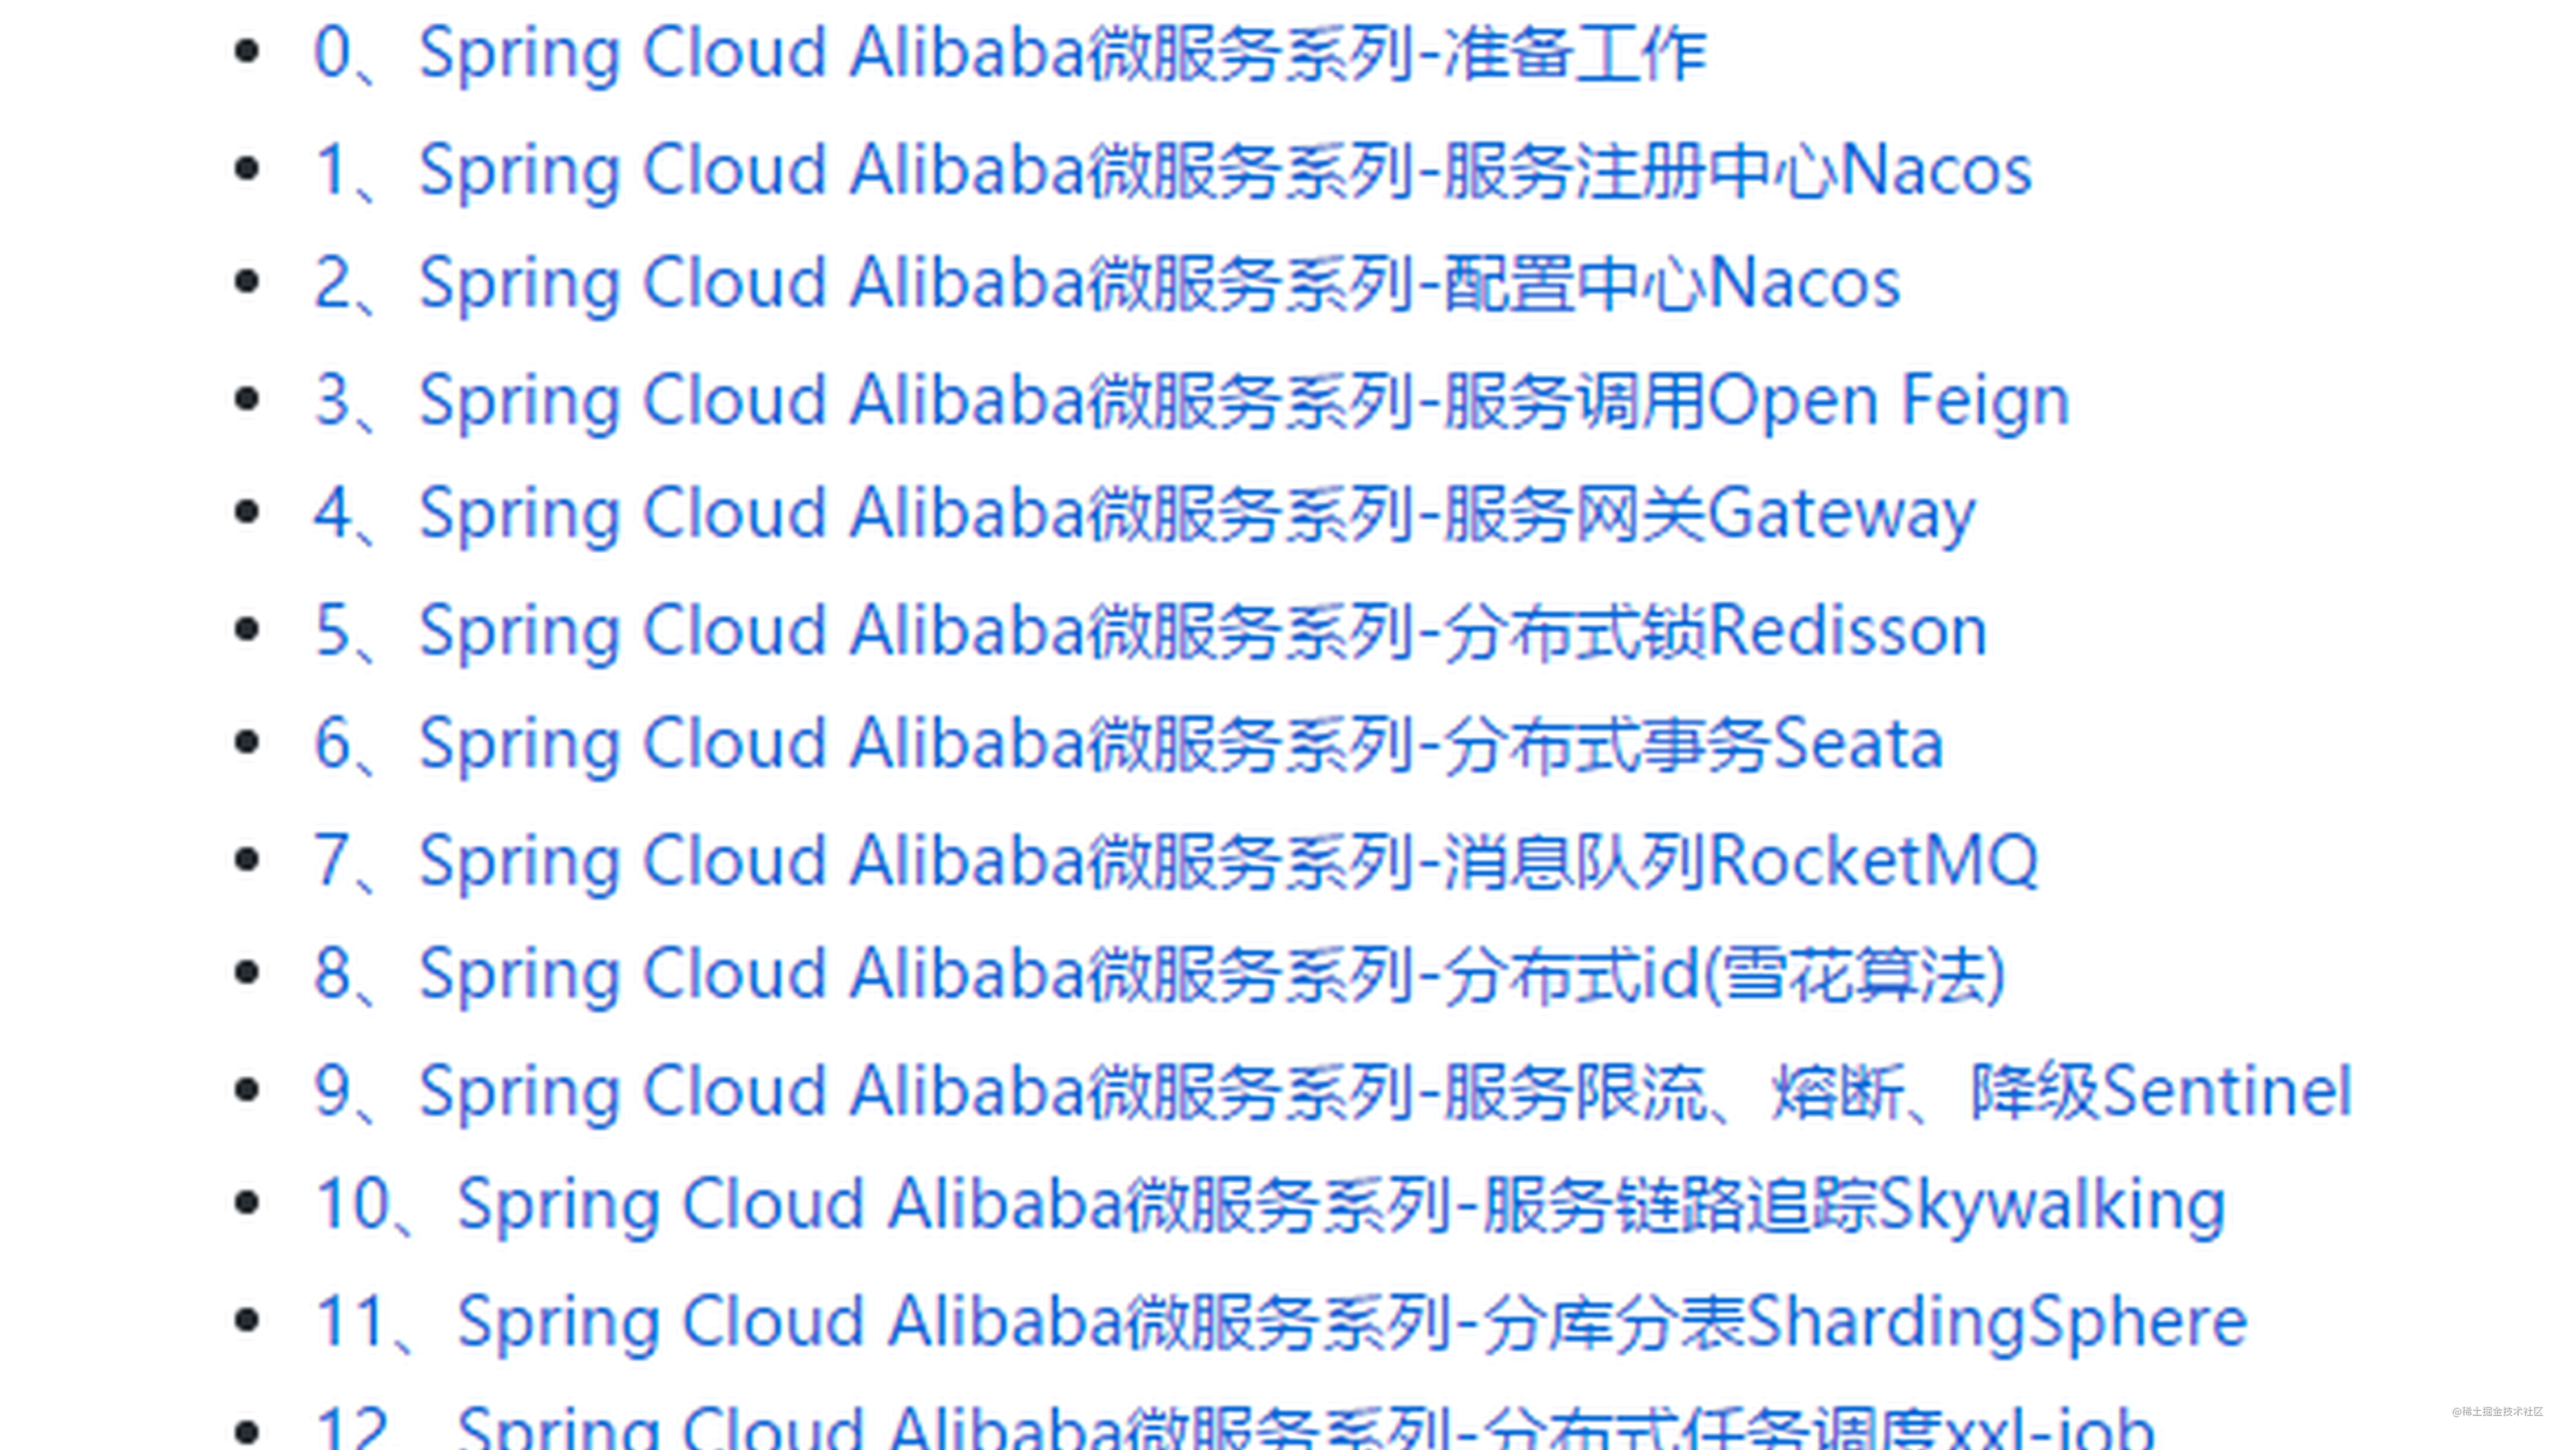 Spring Cloud Alibaba 分布式事务Seata